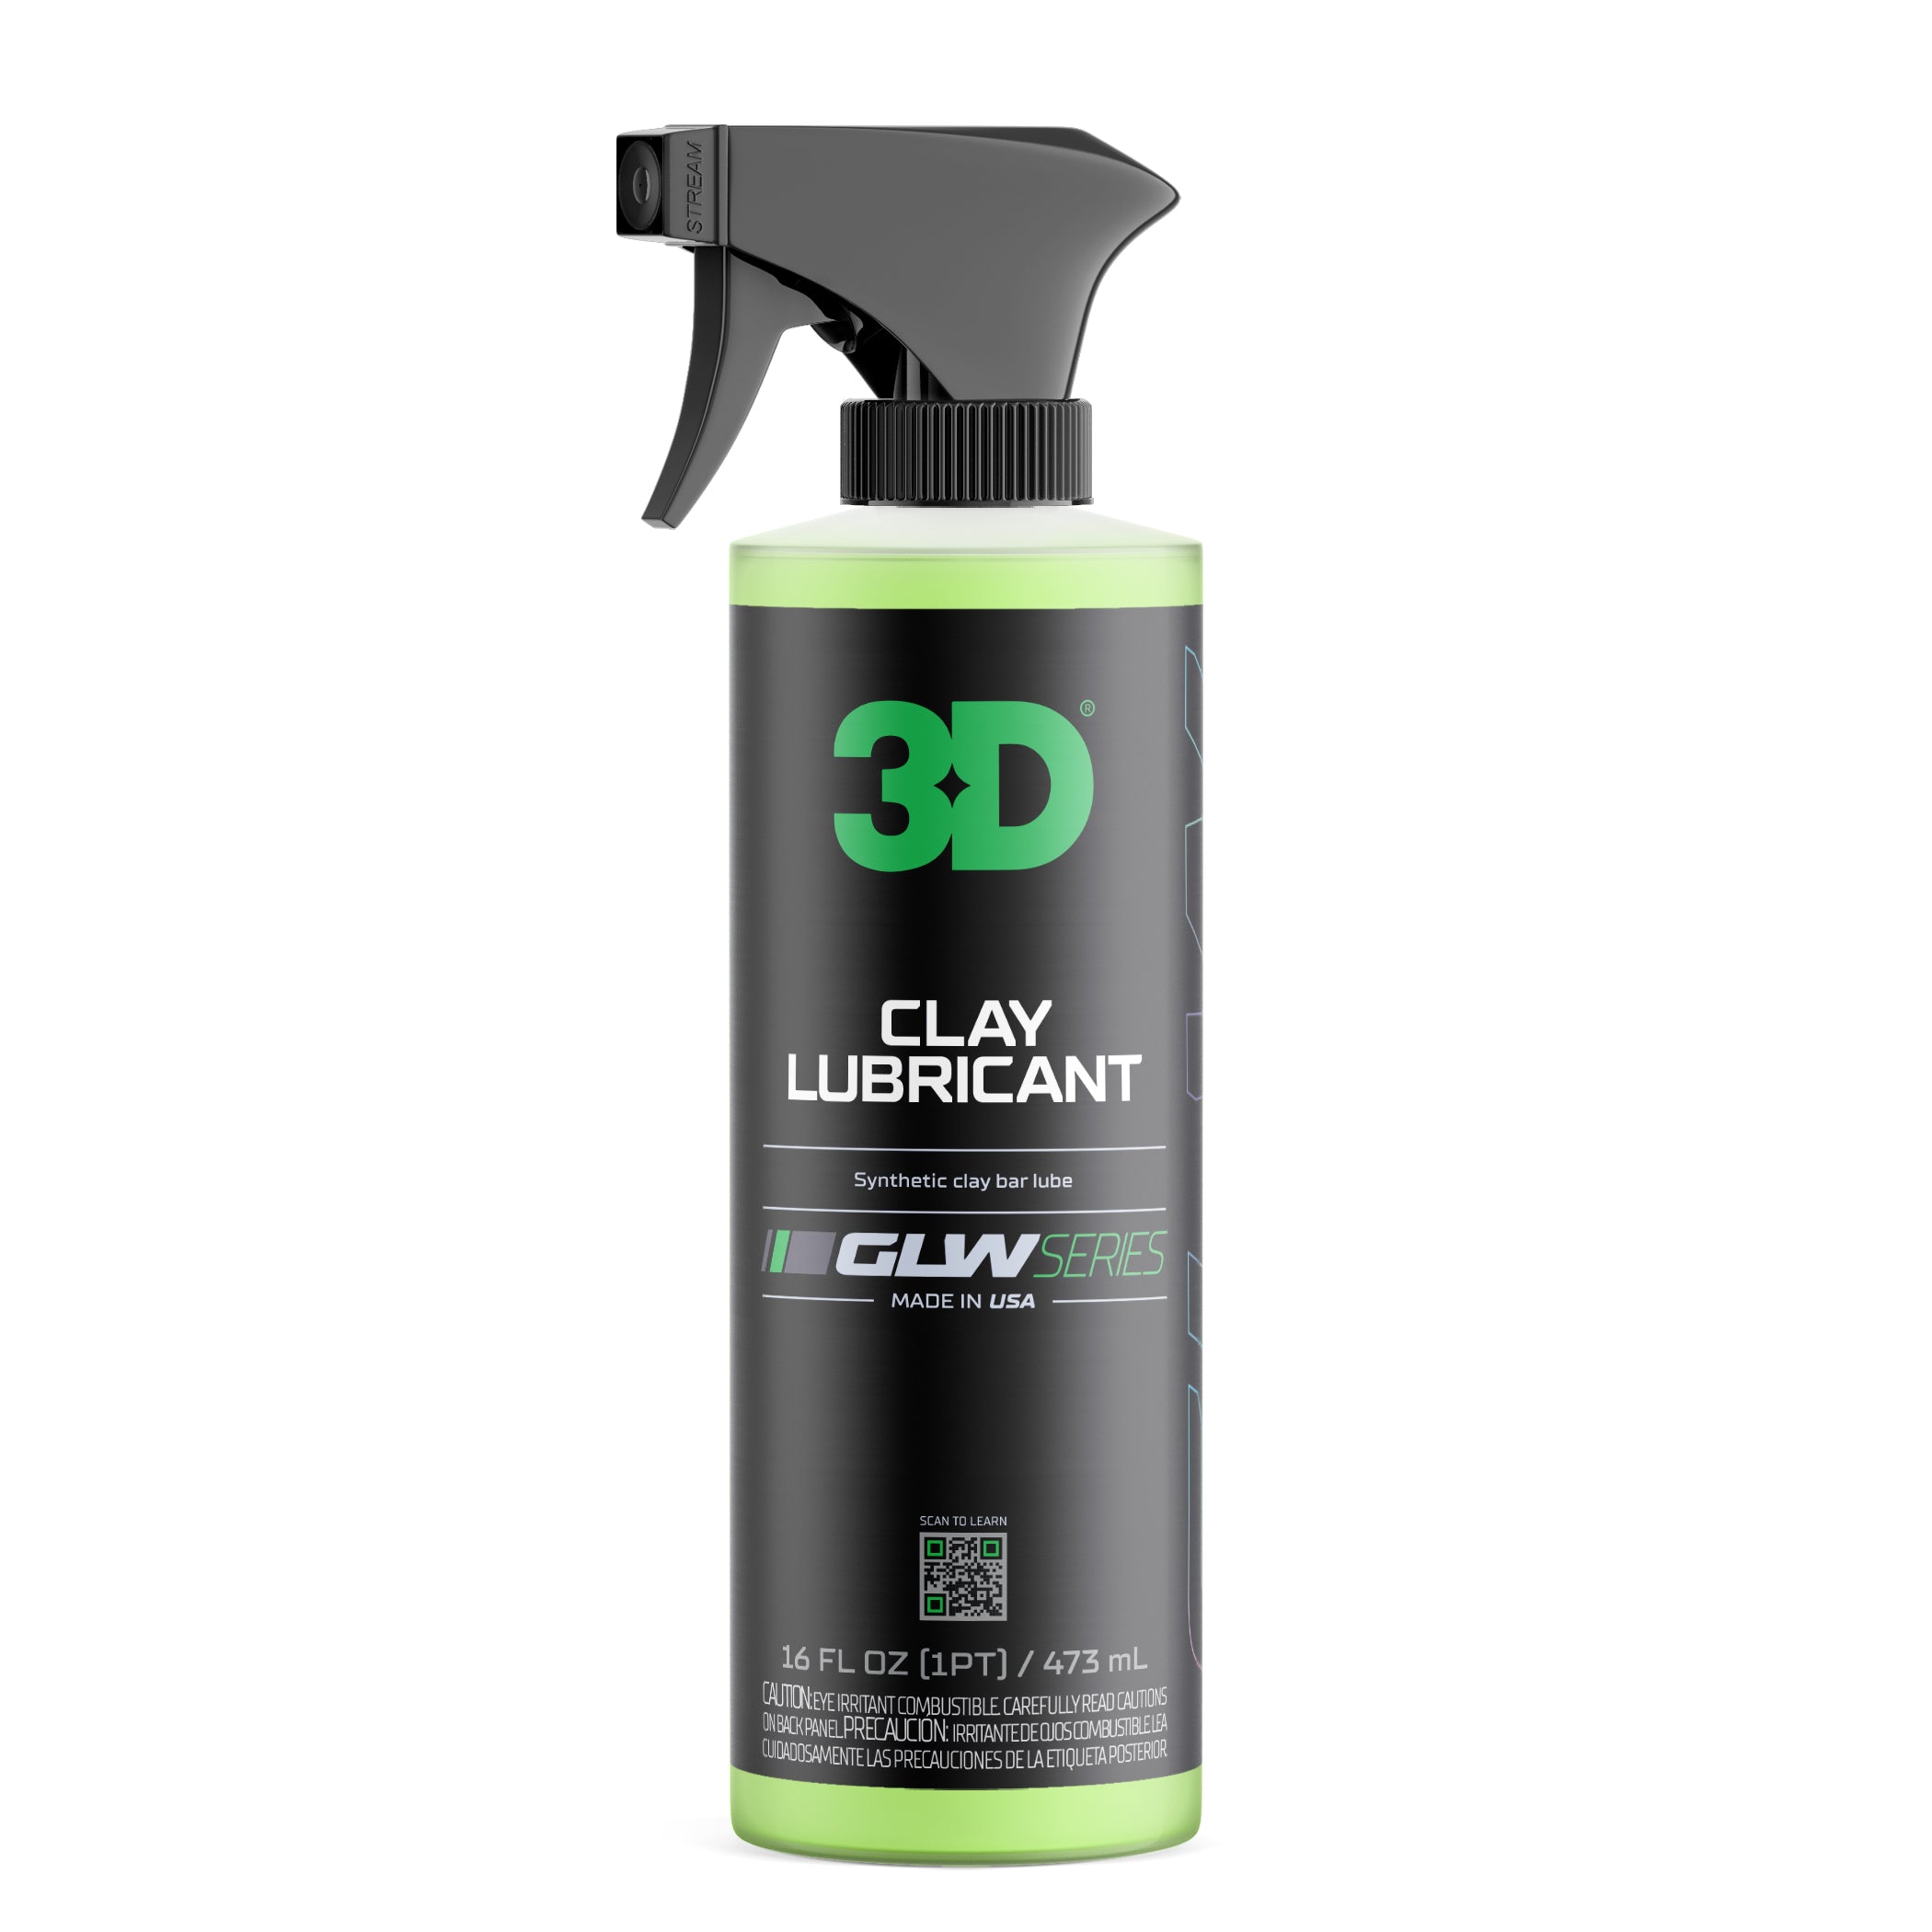 JJ Care Clay Bar - Contains 3 Pack 300 Grams Clay Bar for Car Detailing (3x100g) + 16.9 fl. oz Clay Bar Lubricant + 2 Pack Microfiber Cloth, Clay